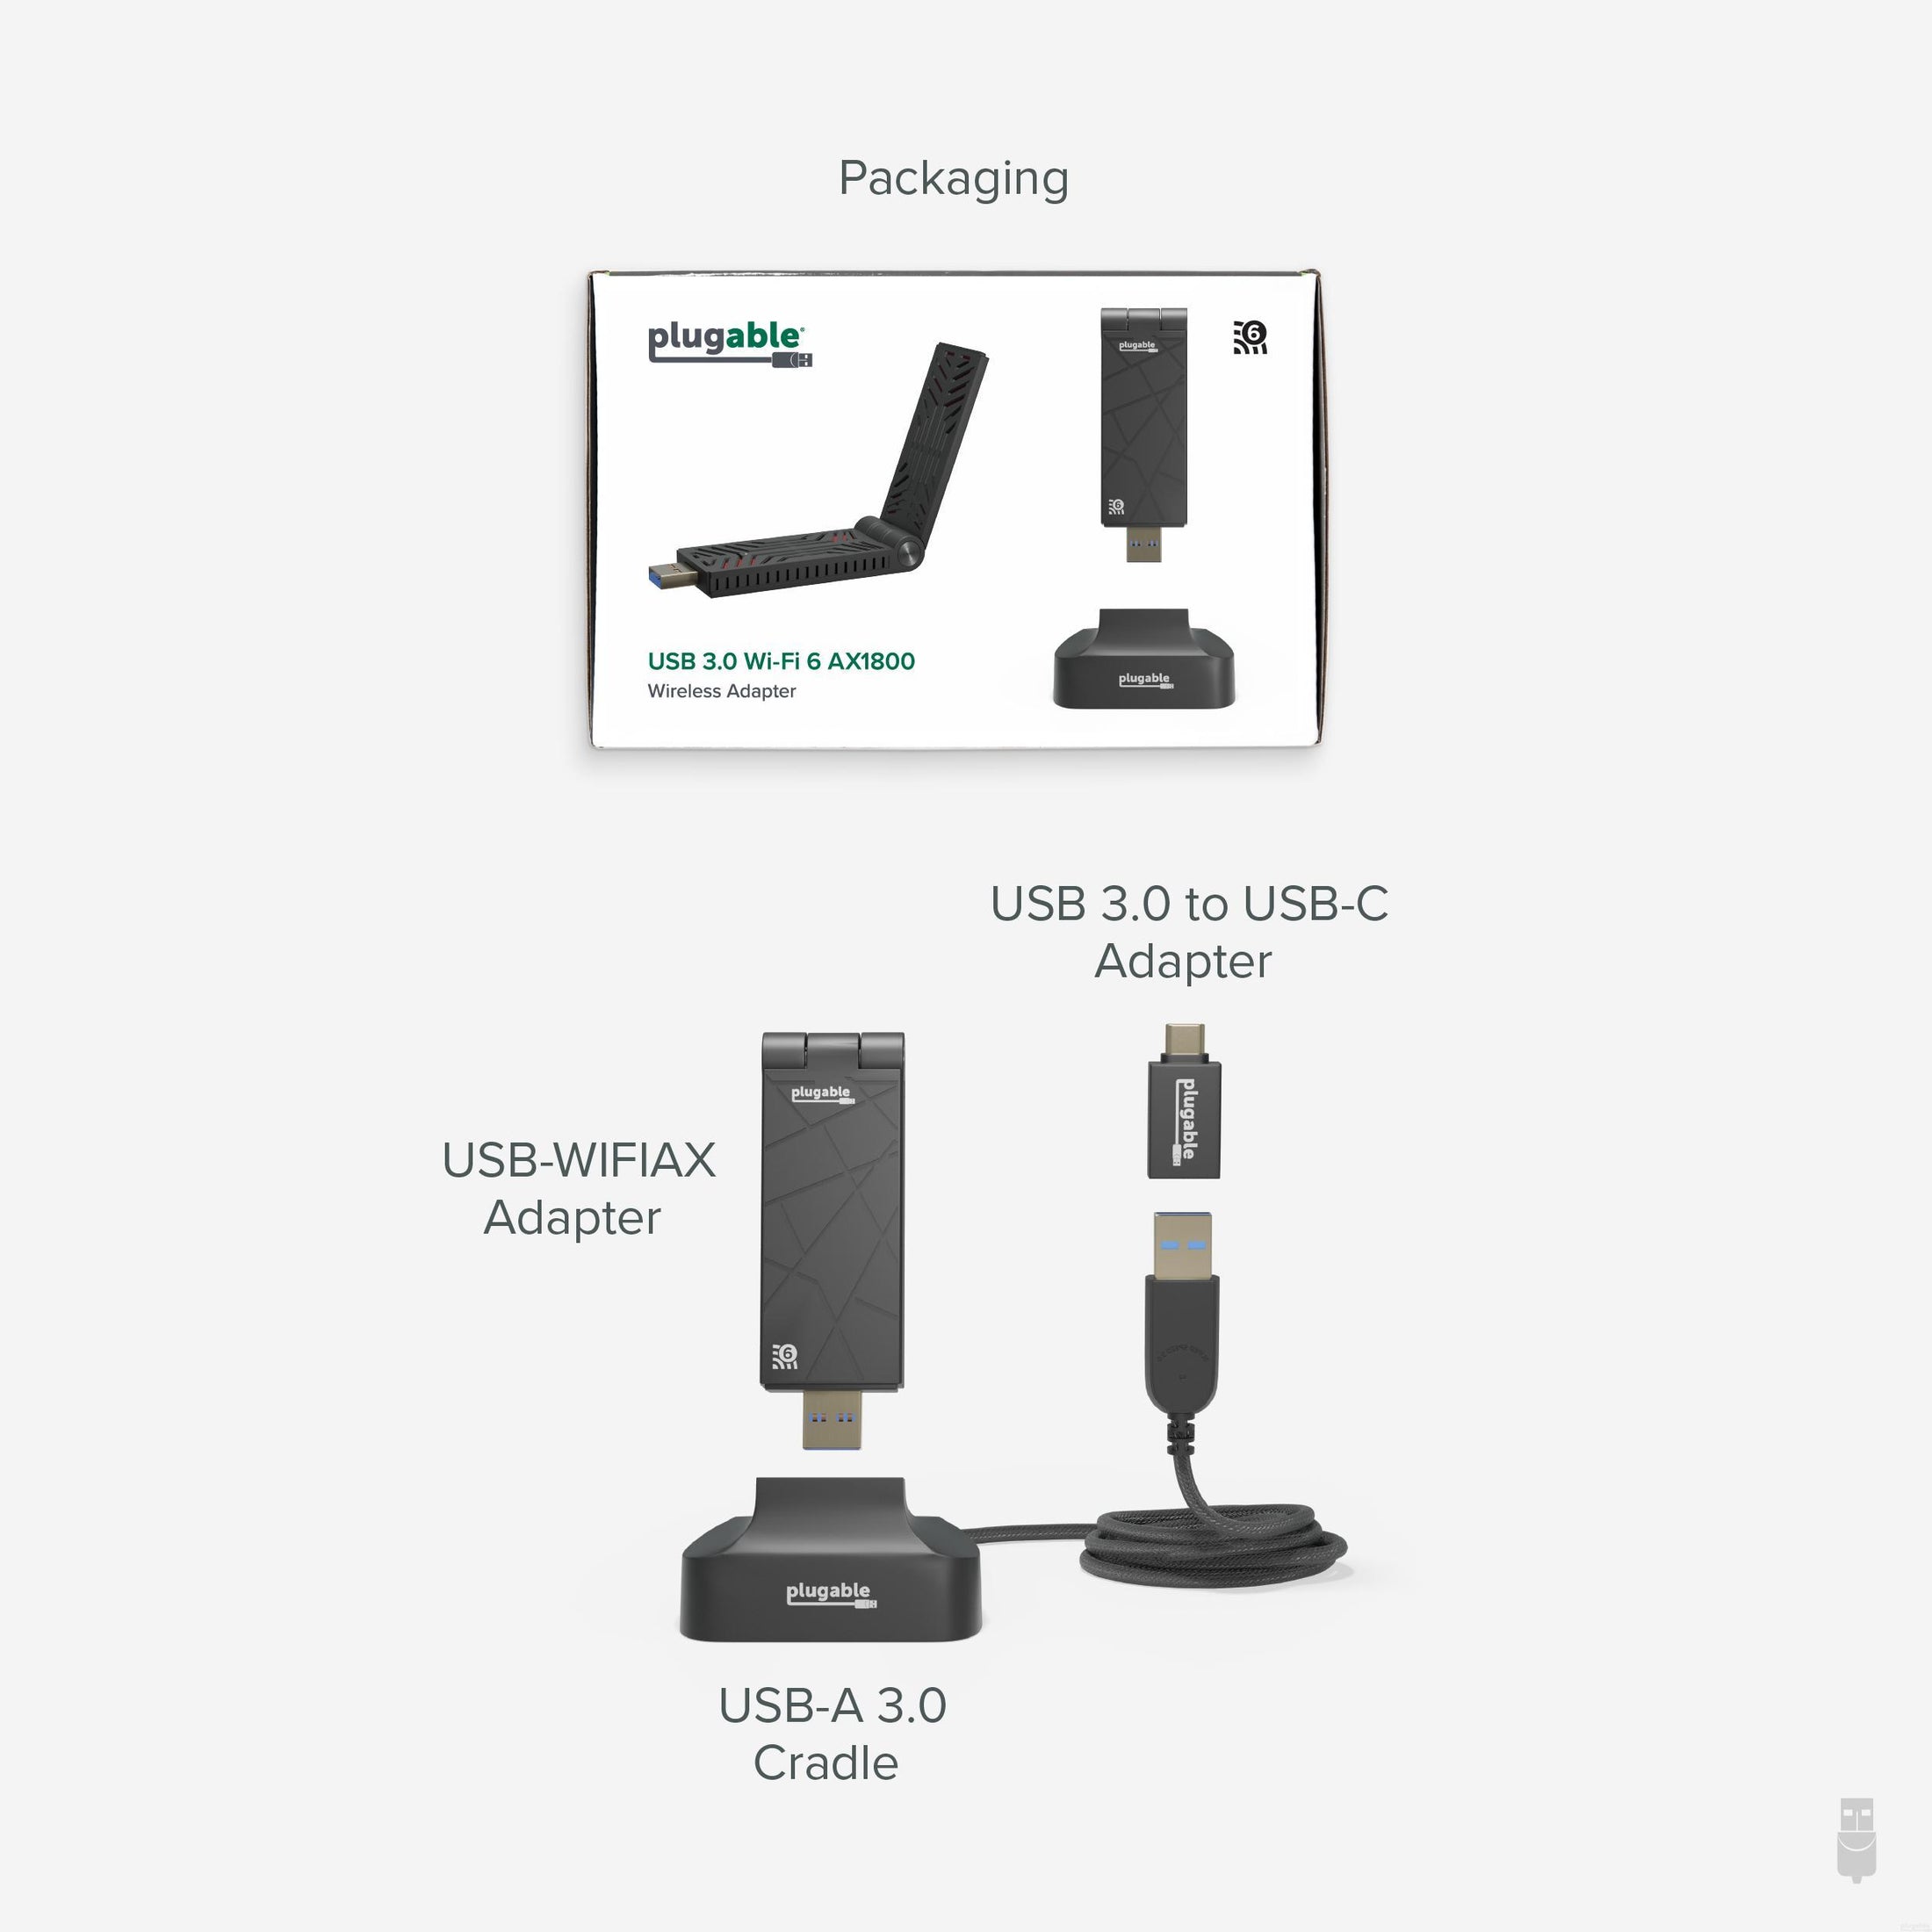 Plugable USB 3.0 Wi-Fi 6 AX1800 Wireless Adapter